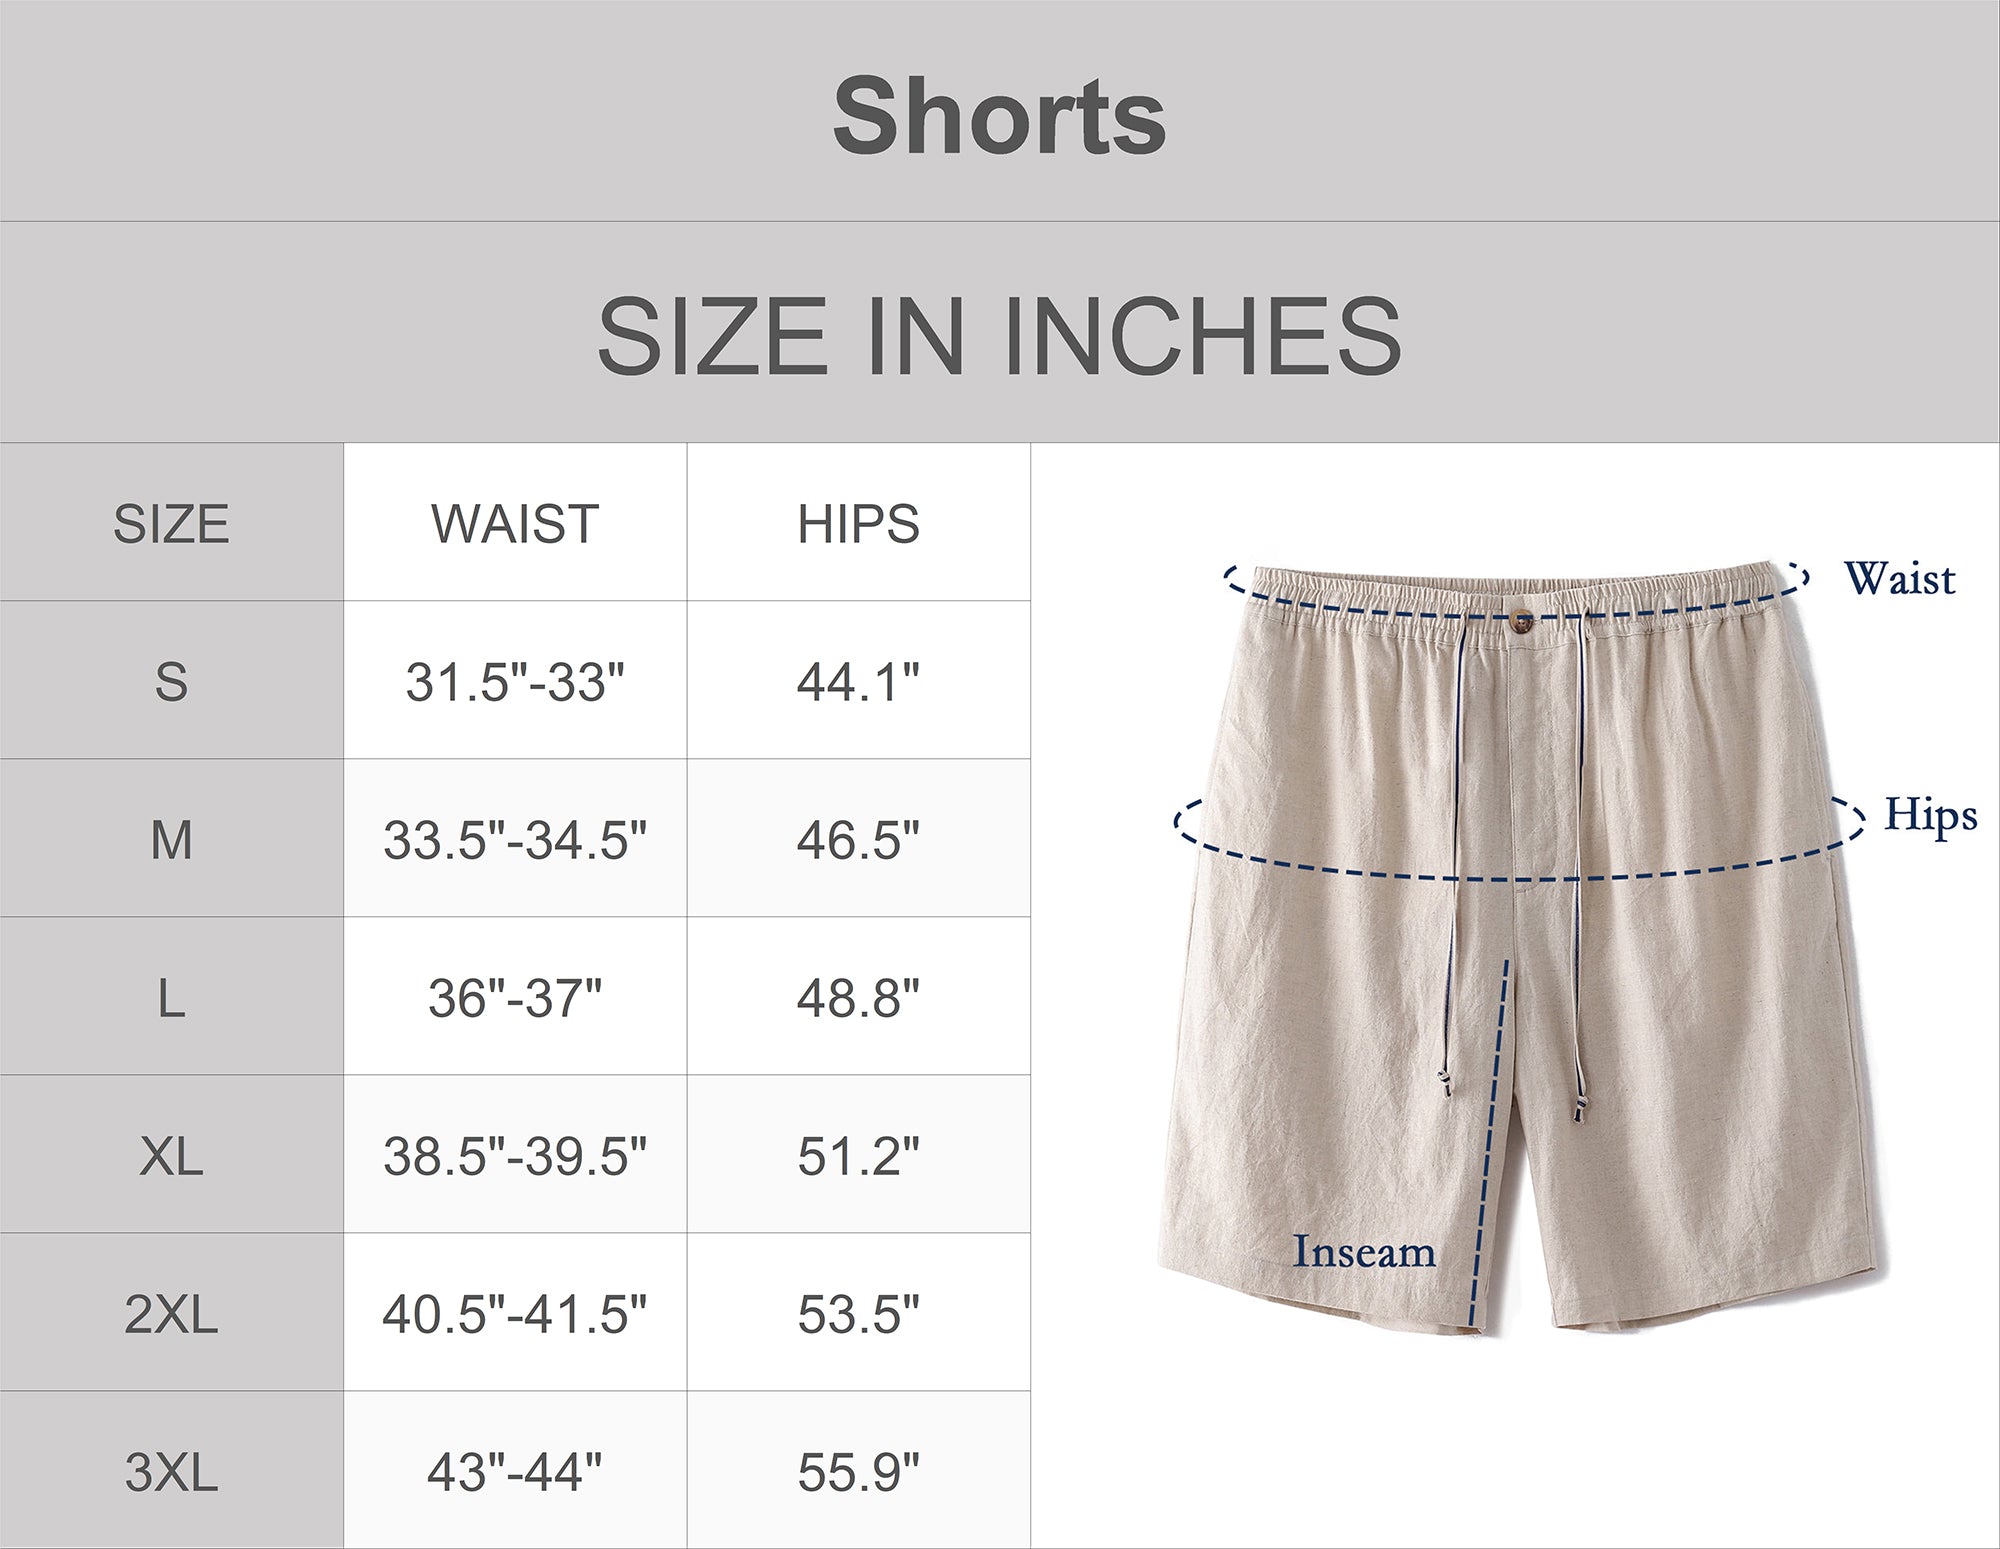 Linen Shorts For Men Mid-Rise Straight Bermuda 8-10 Inch Shorts - NAVY BLUE Version 3.0